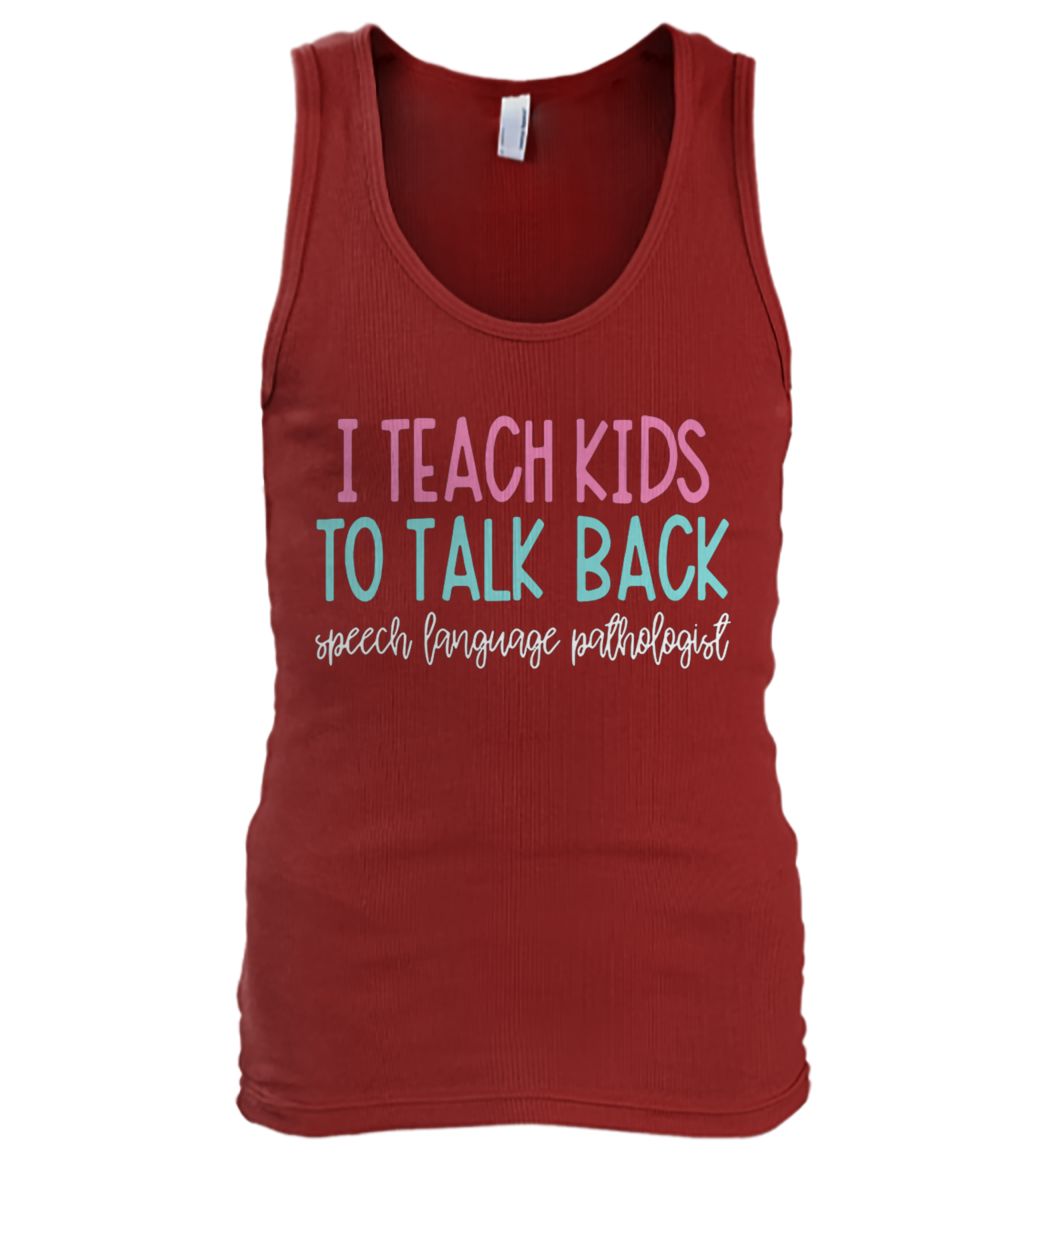 I teach kids to talk back speech language pathologist men's tank top